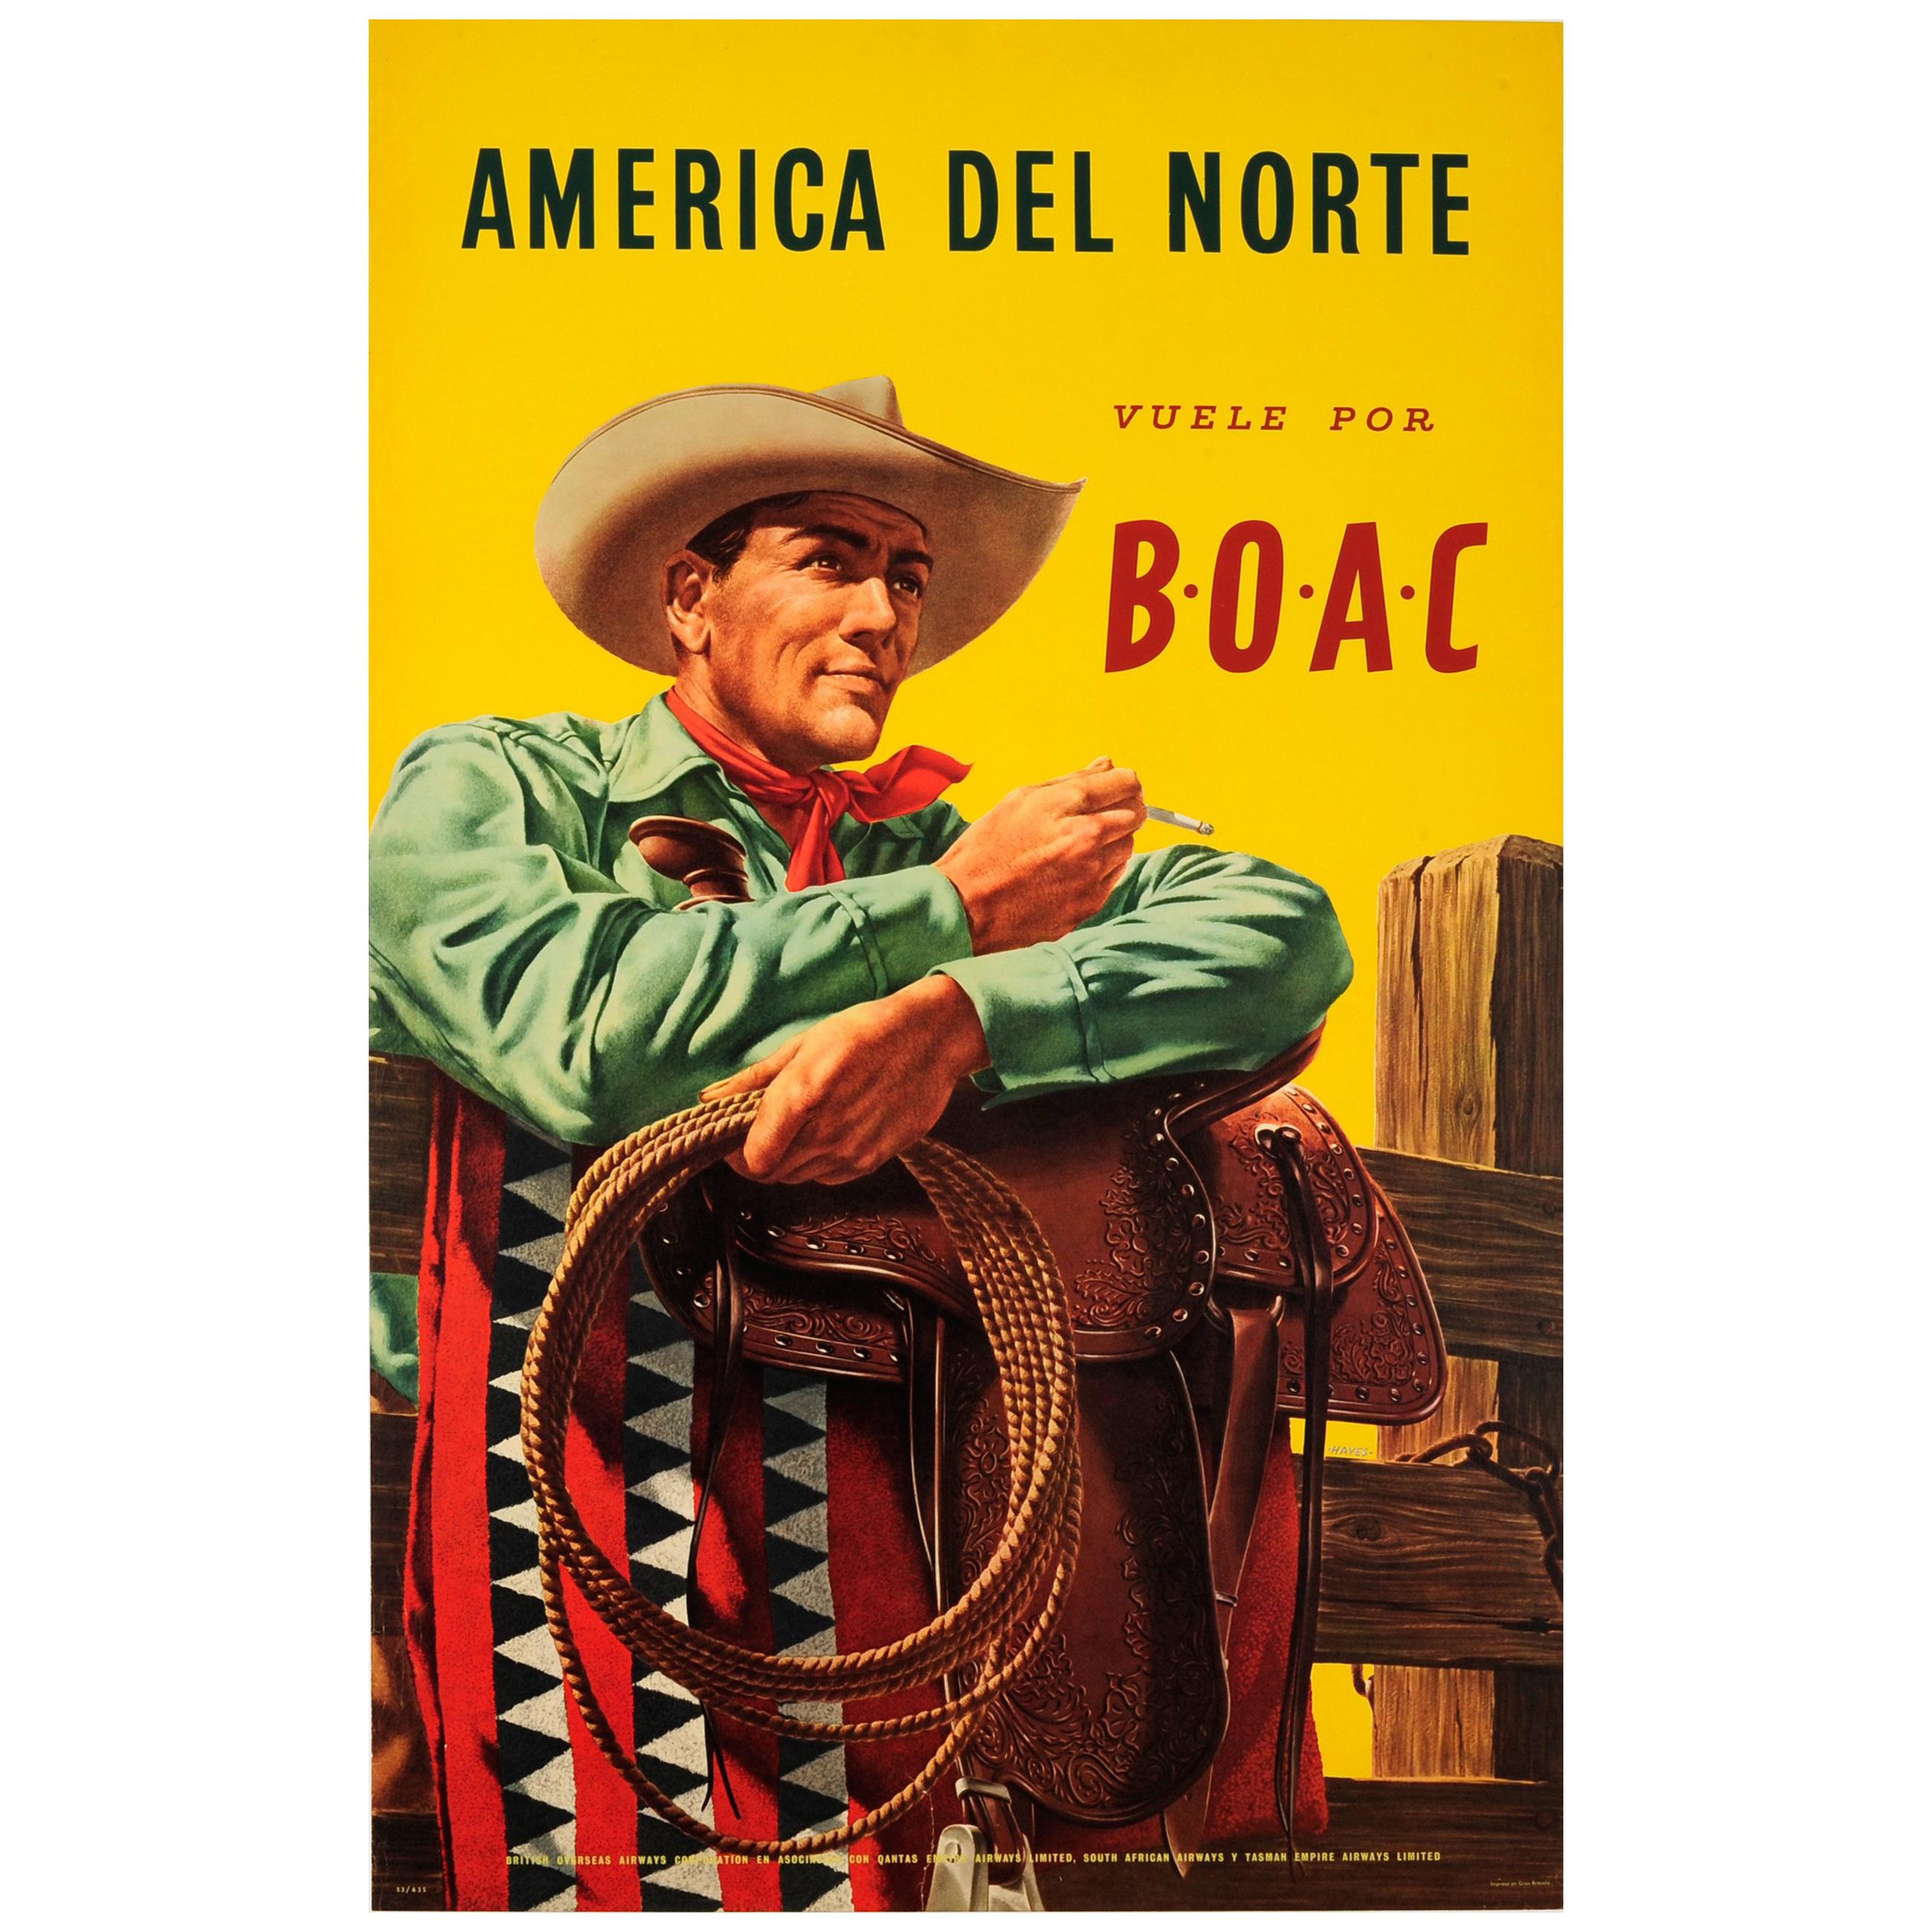 Original Vintage BOAC Travel Poster for North America Del Norte Vuele Por BOAC